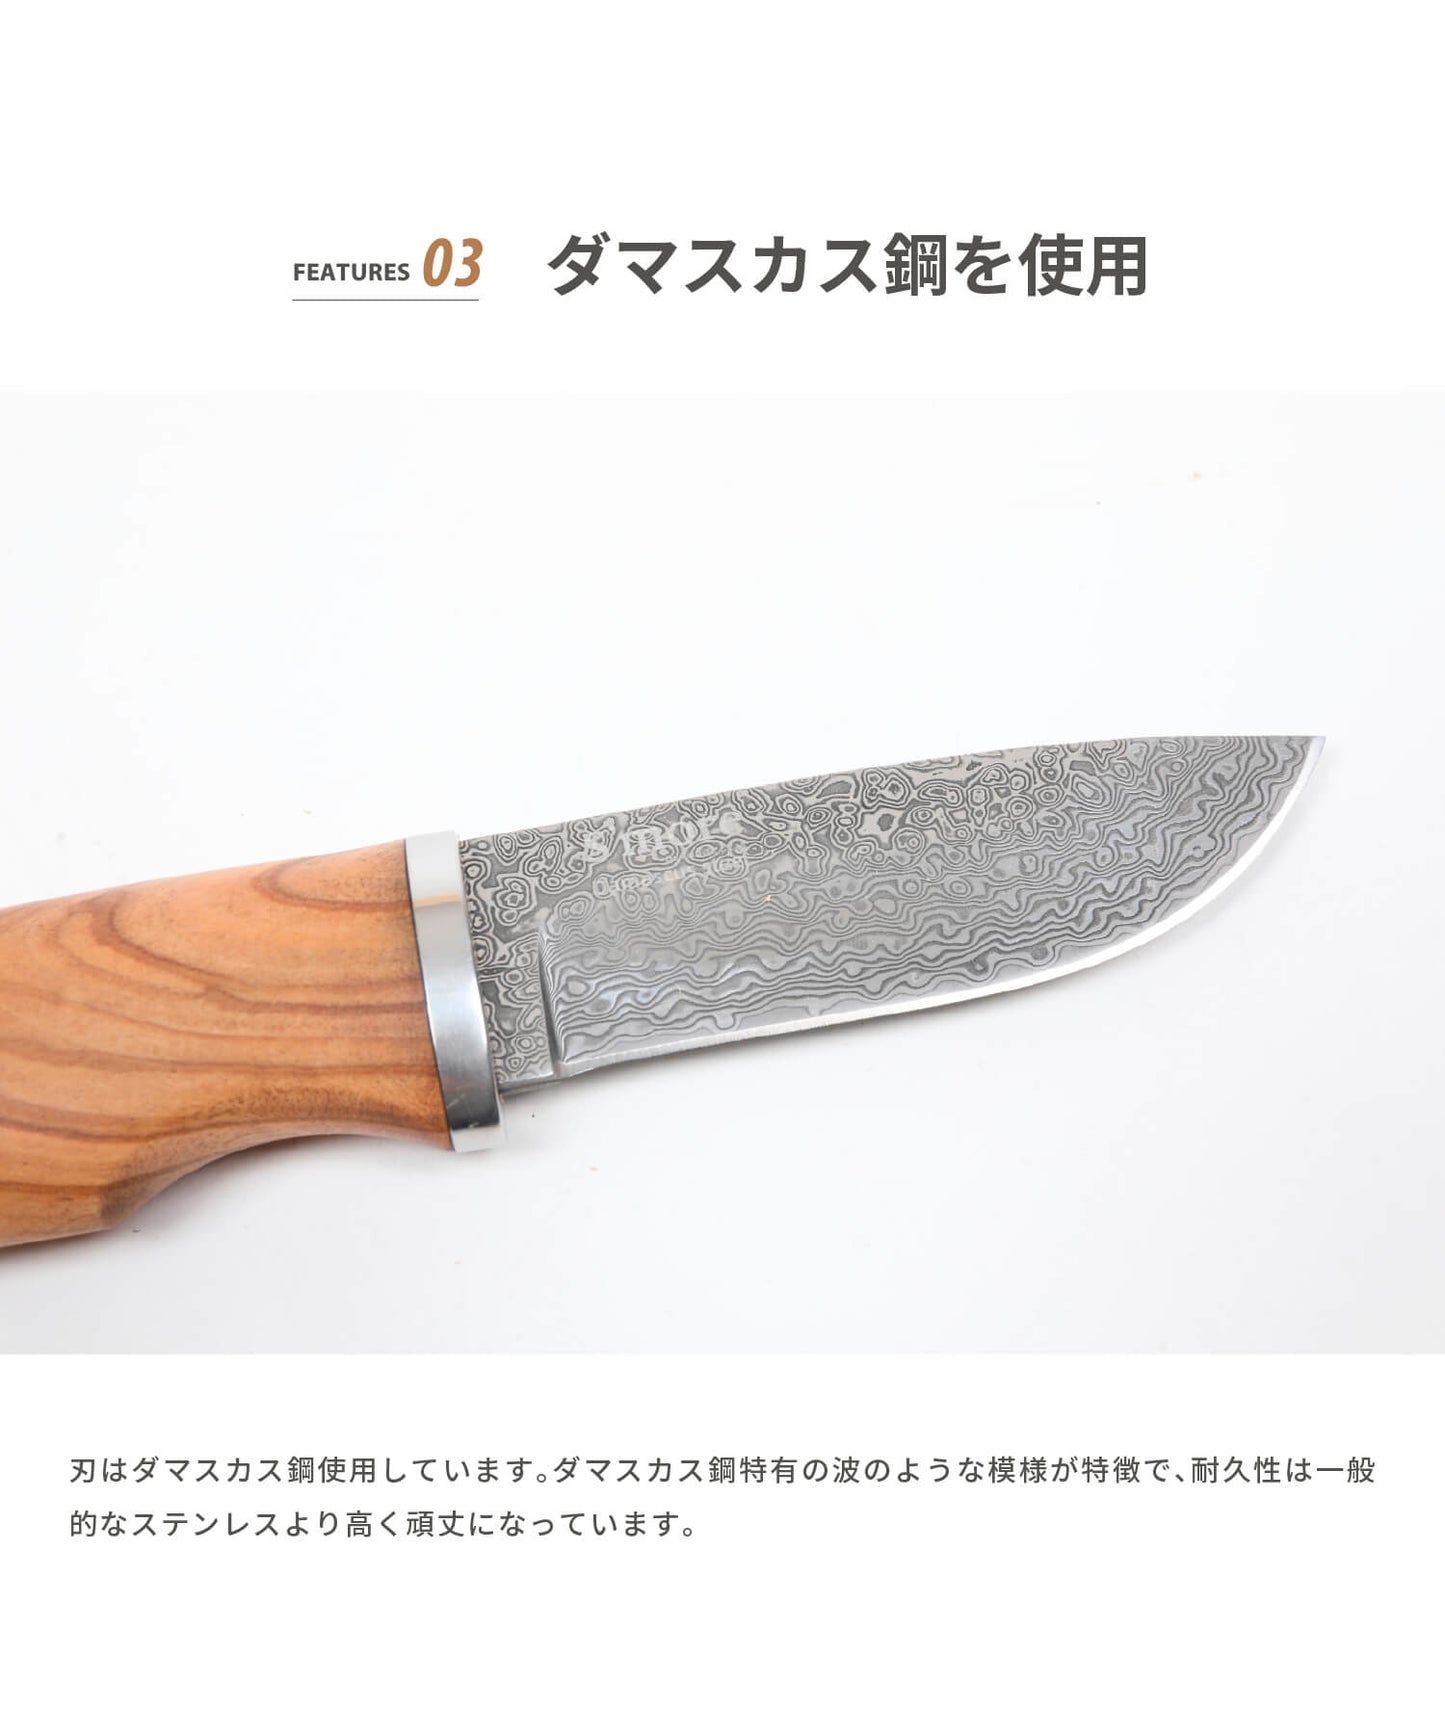 New!!【 masse knife 】 マッスナイフ ナイフ ダマスカス